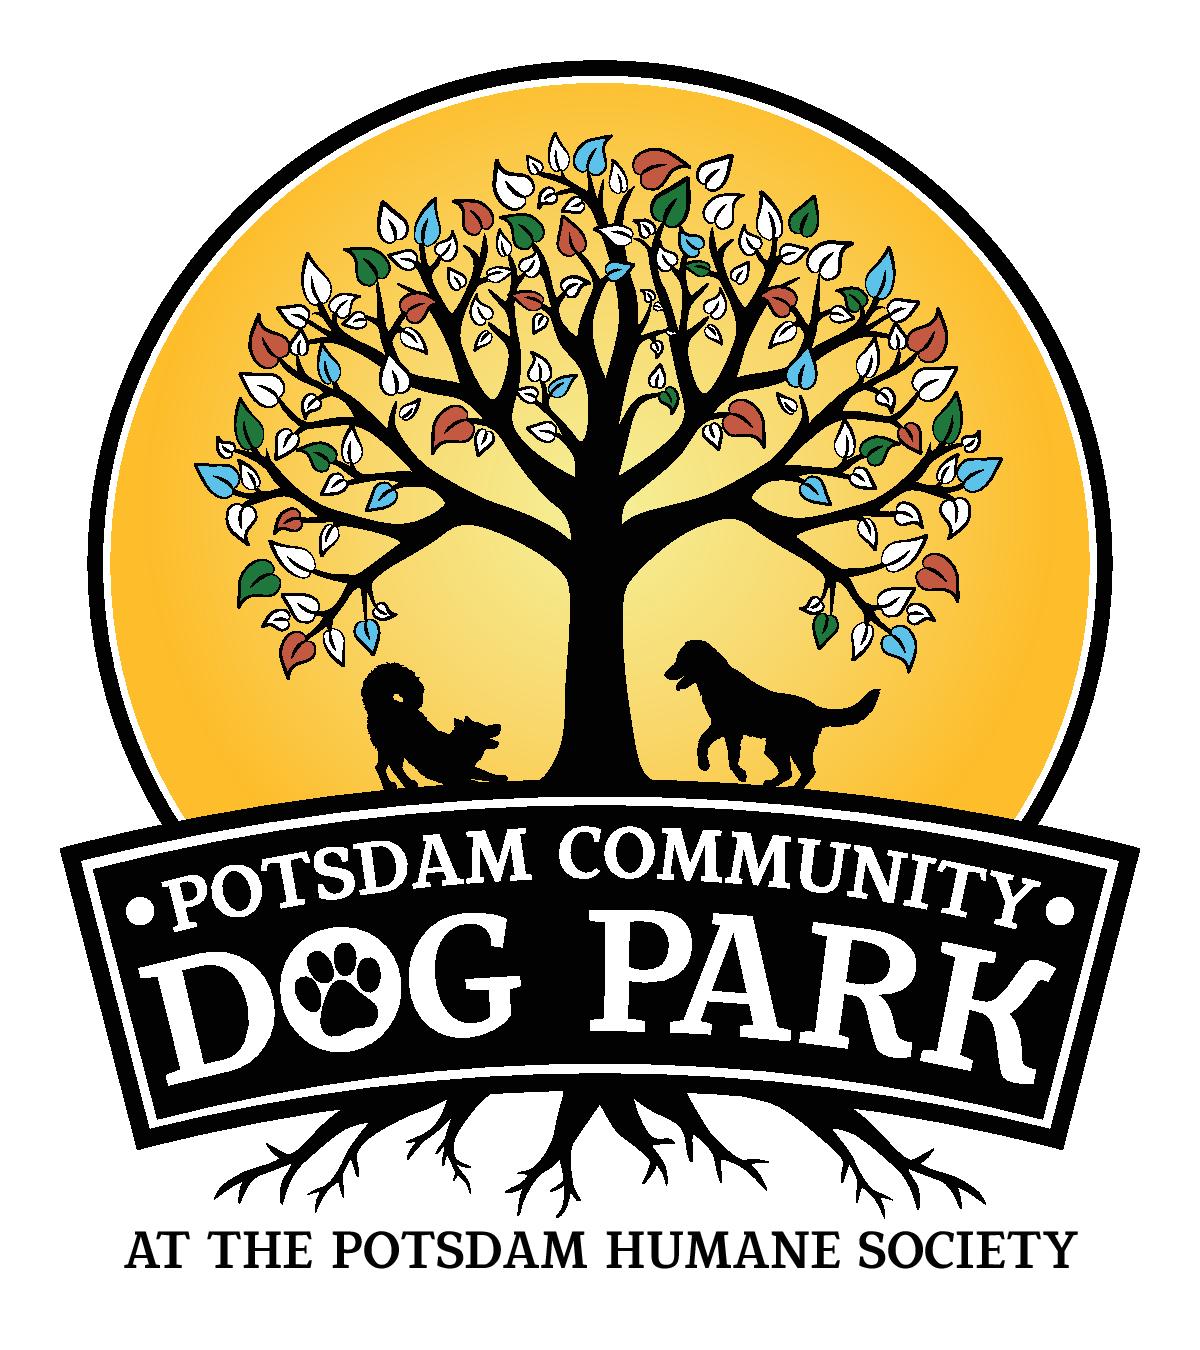 The Potsdam Community Dog Park